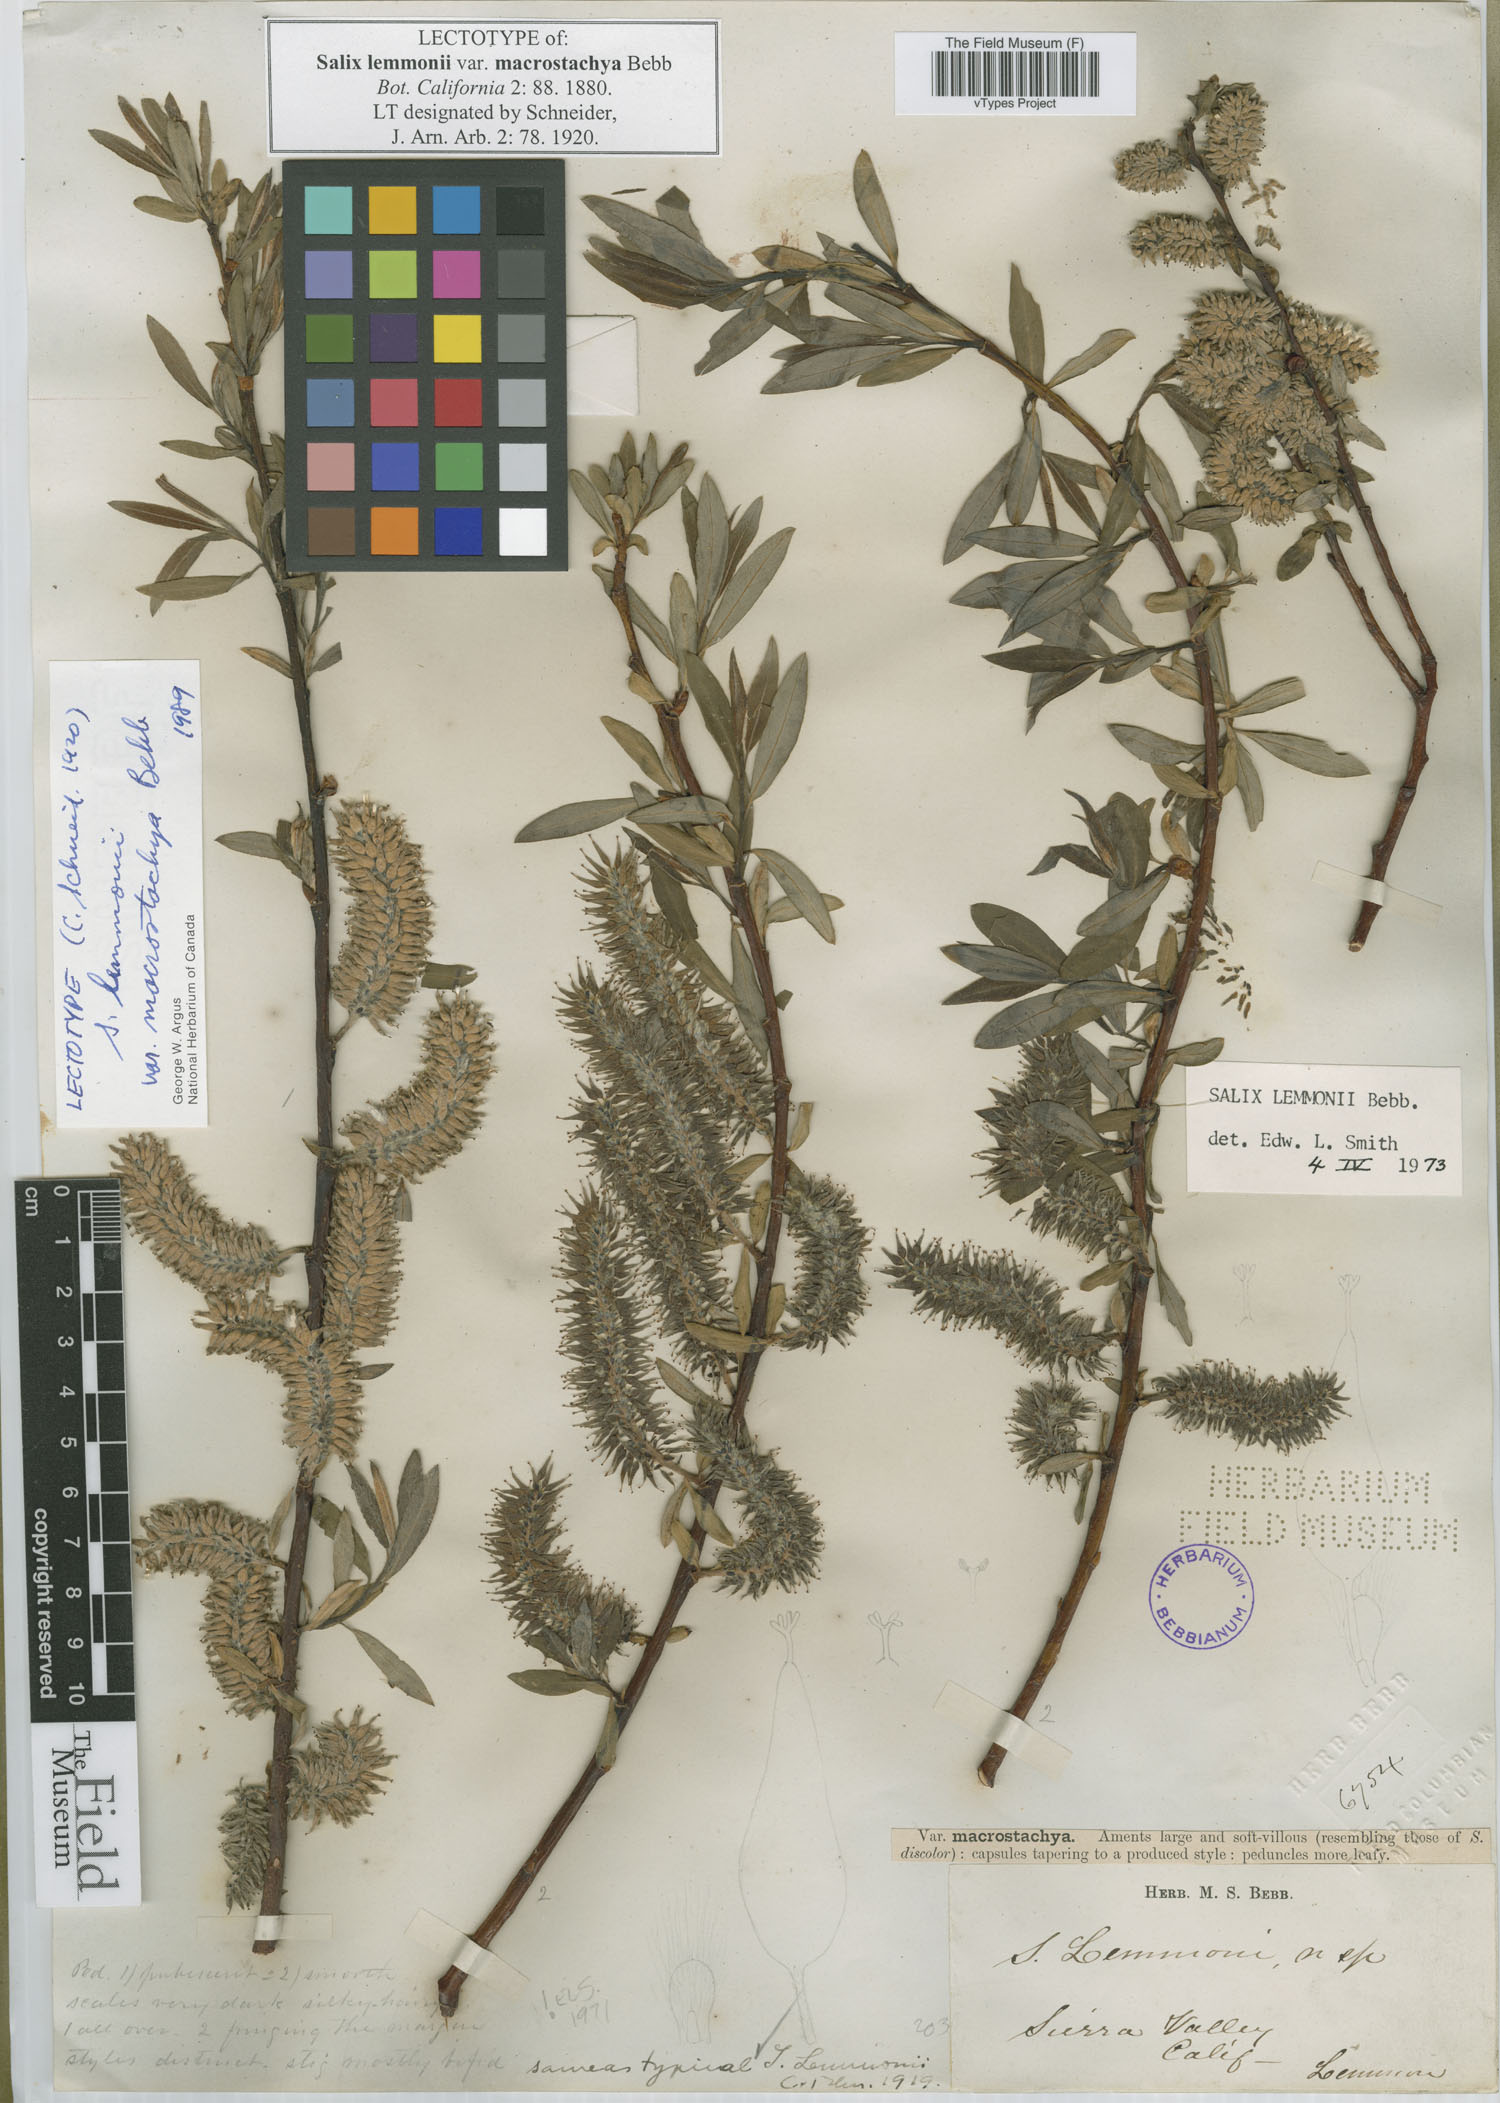 Salix lemmonii var. macrostachya image